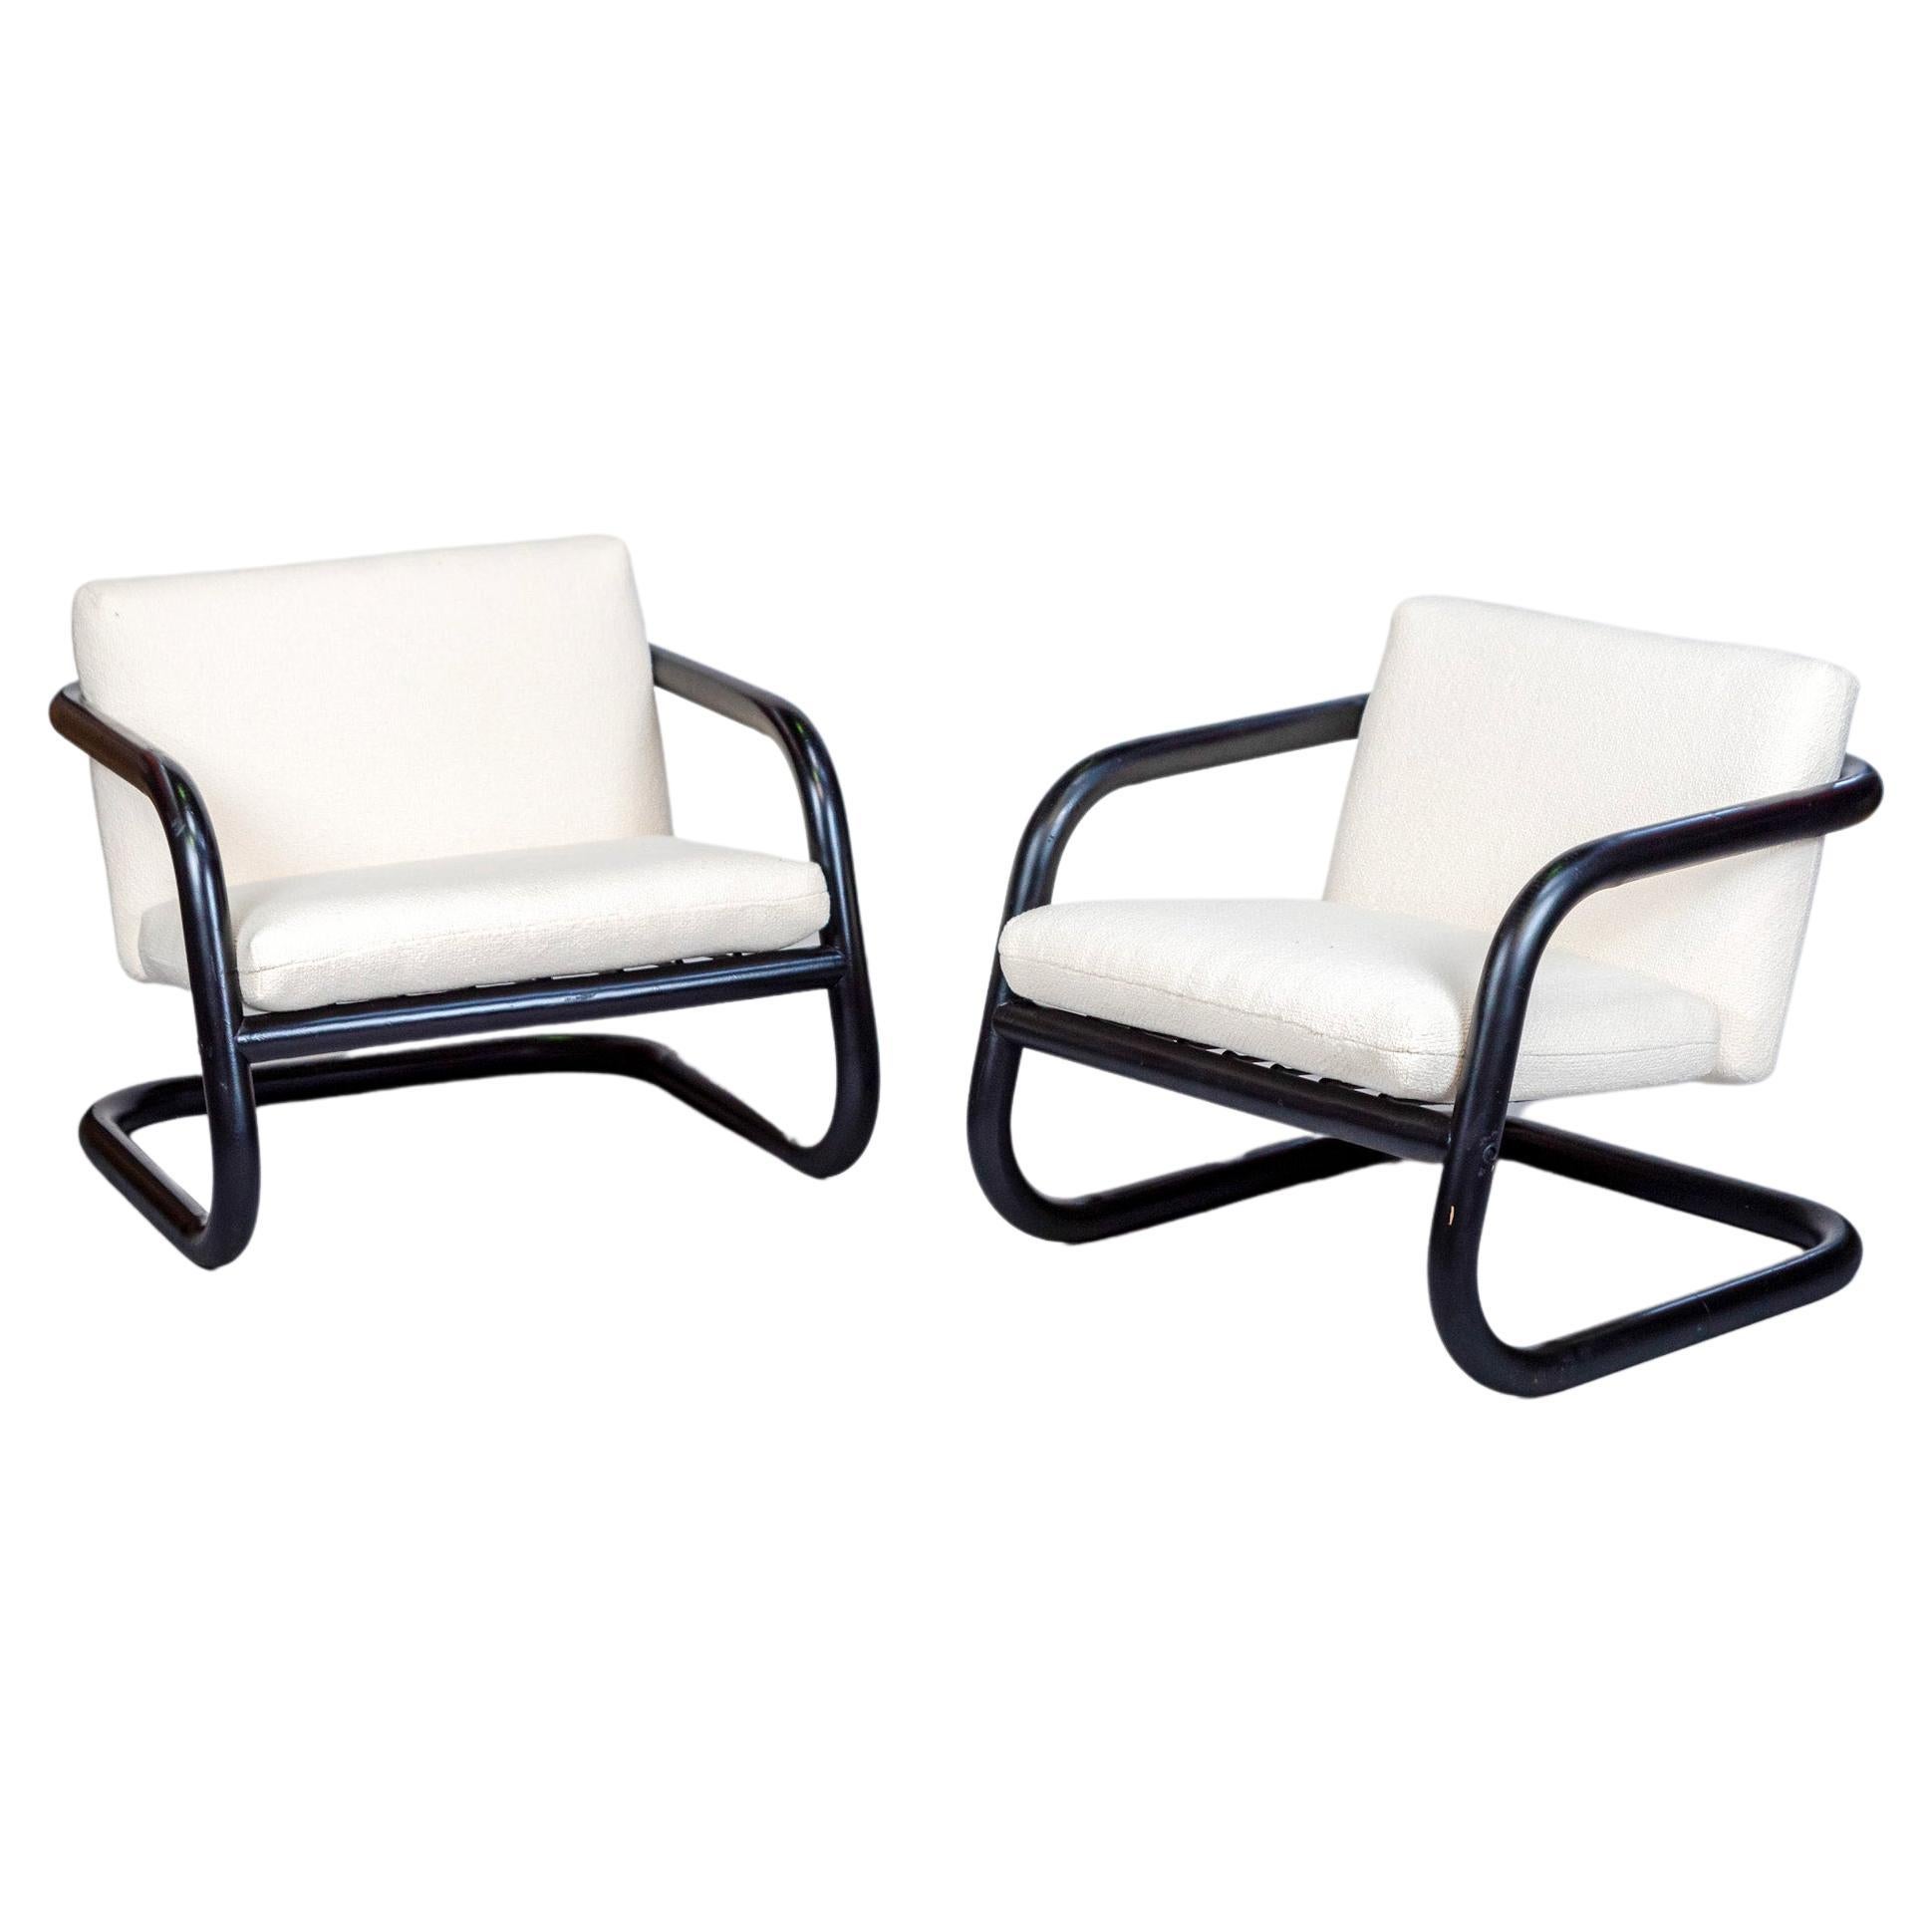 Geraldo de Barros, Pair of tubular metal armchairs , c. 1970